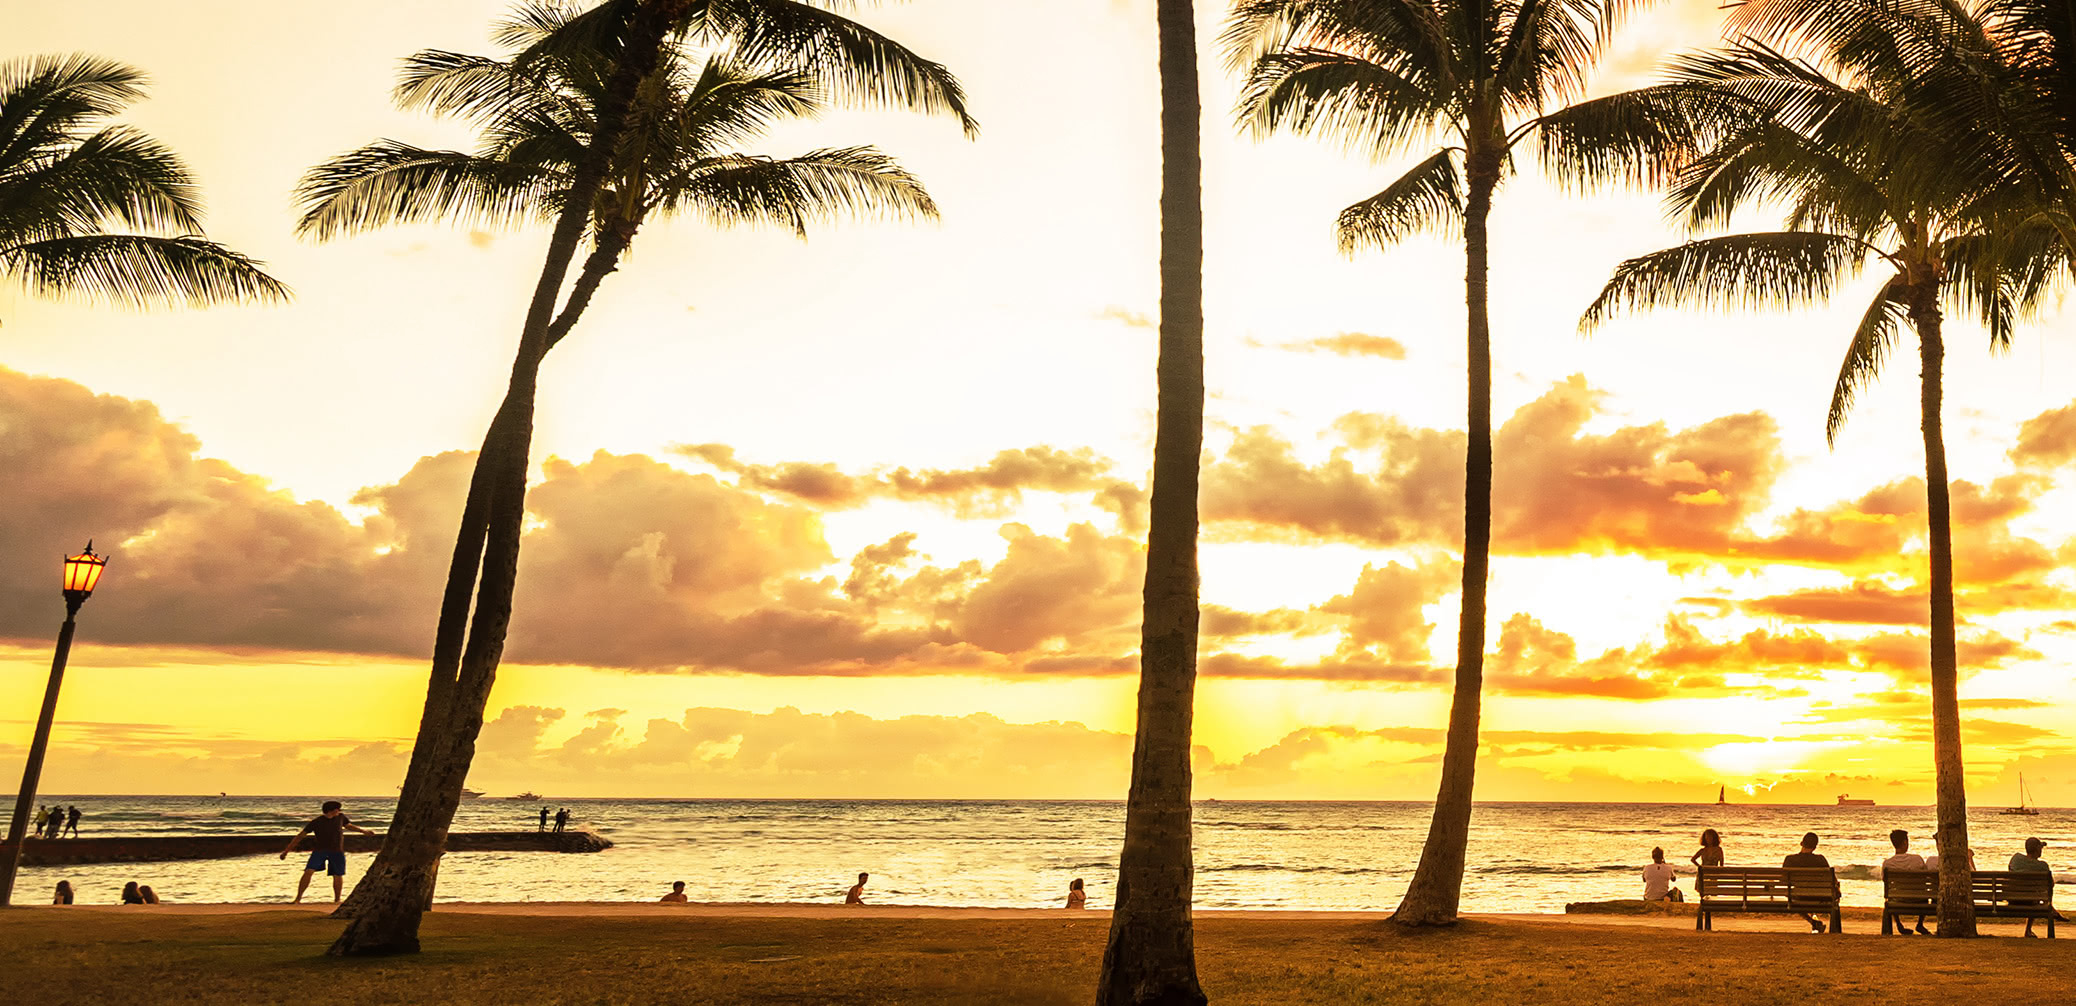 Is Moana Surfrider Or Ritz-Carlton A Better Marriott Bonvoy Hotel In Waikiki?